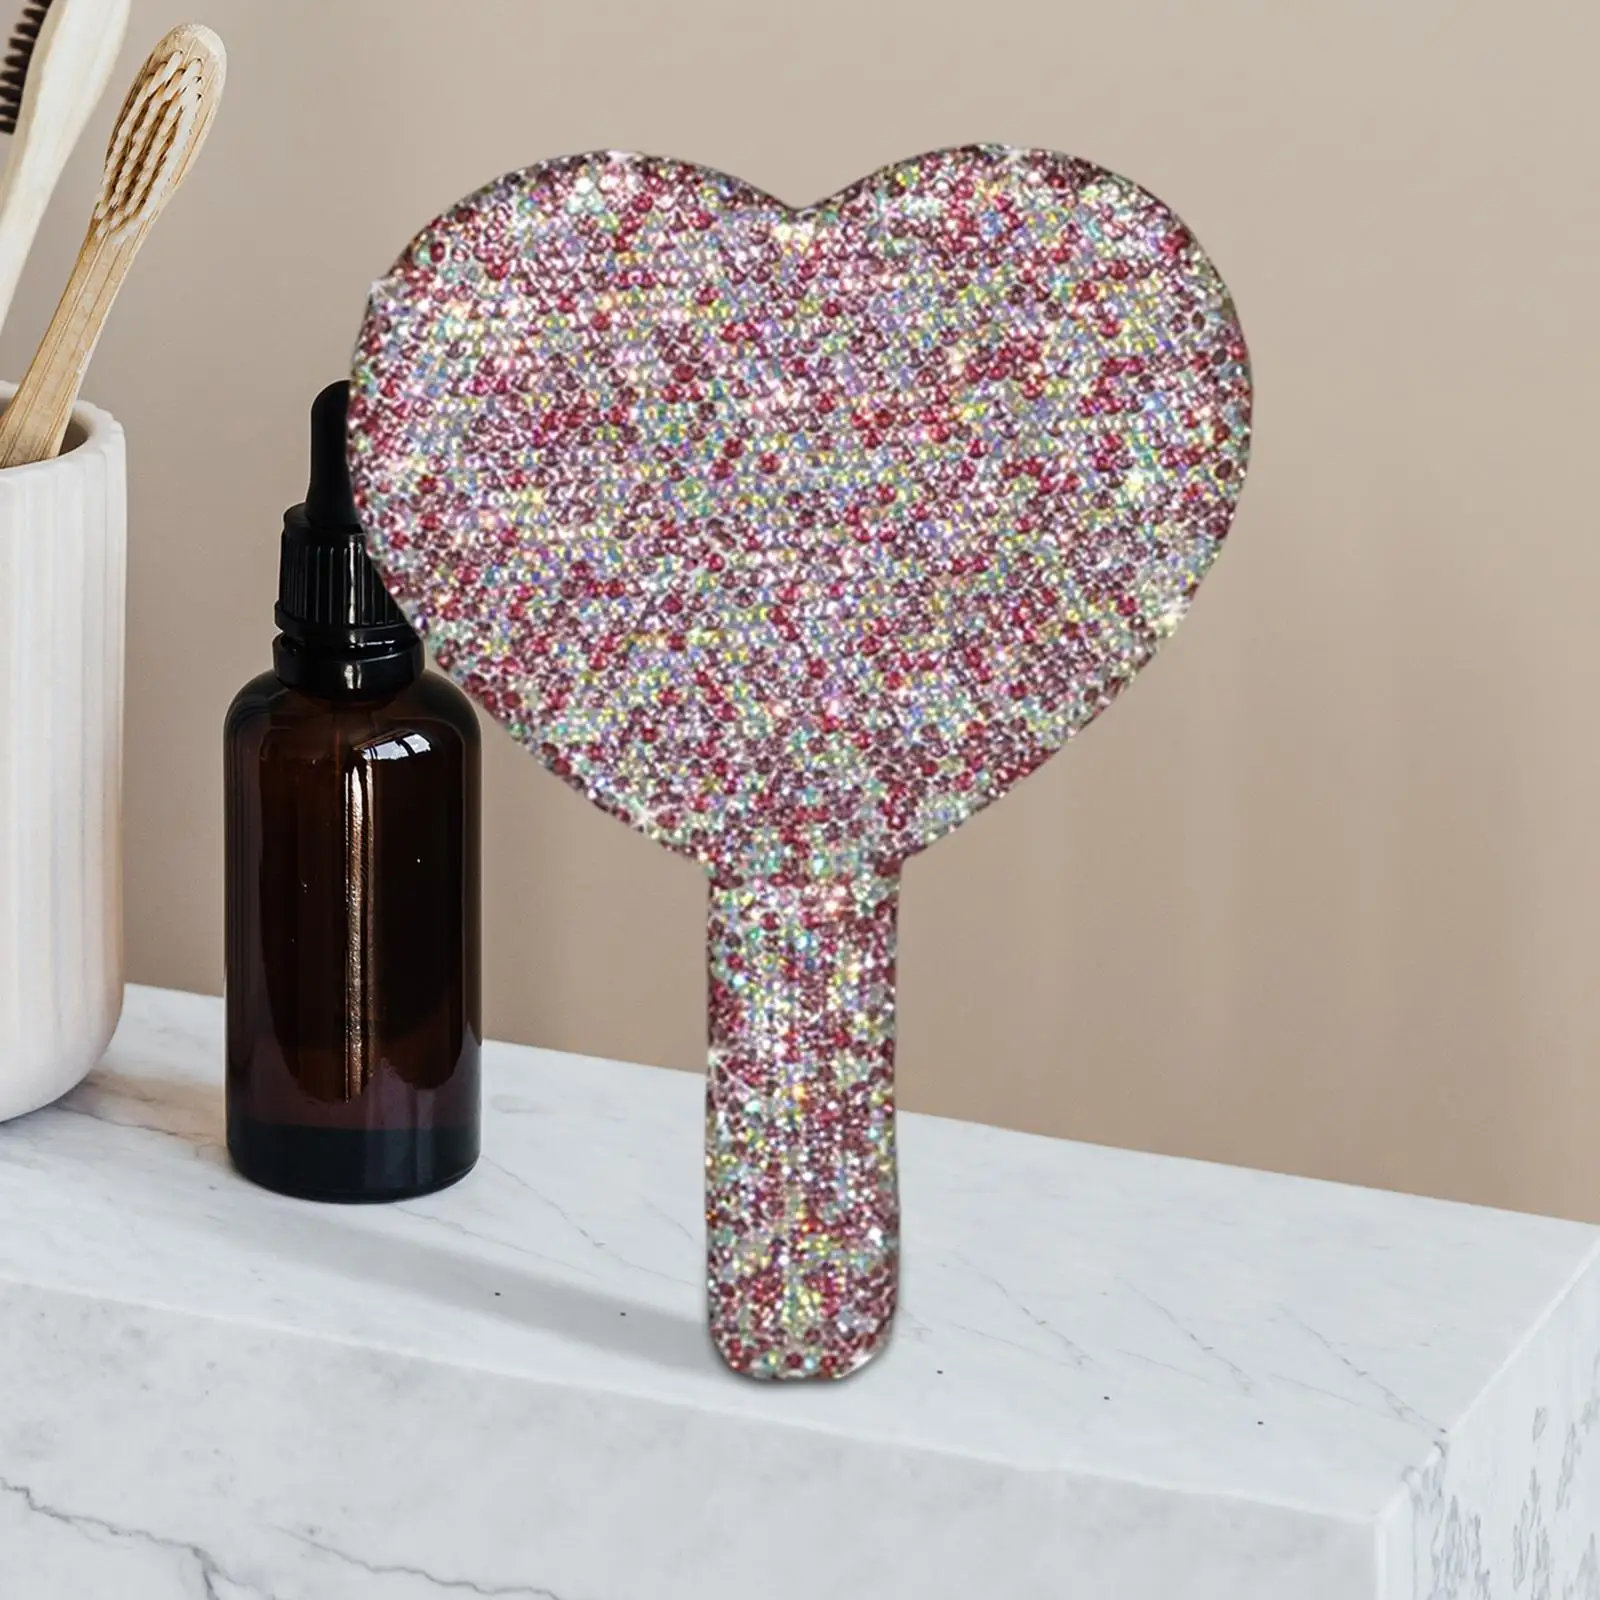 Small Handheld Makeup Mirror Pocket Mirror Rhinestone Decor Decorative Bling Heart Mirrors for Girls Women Valentine`S Day Gift